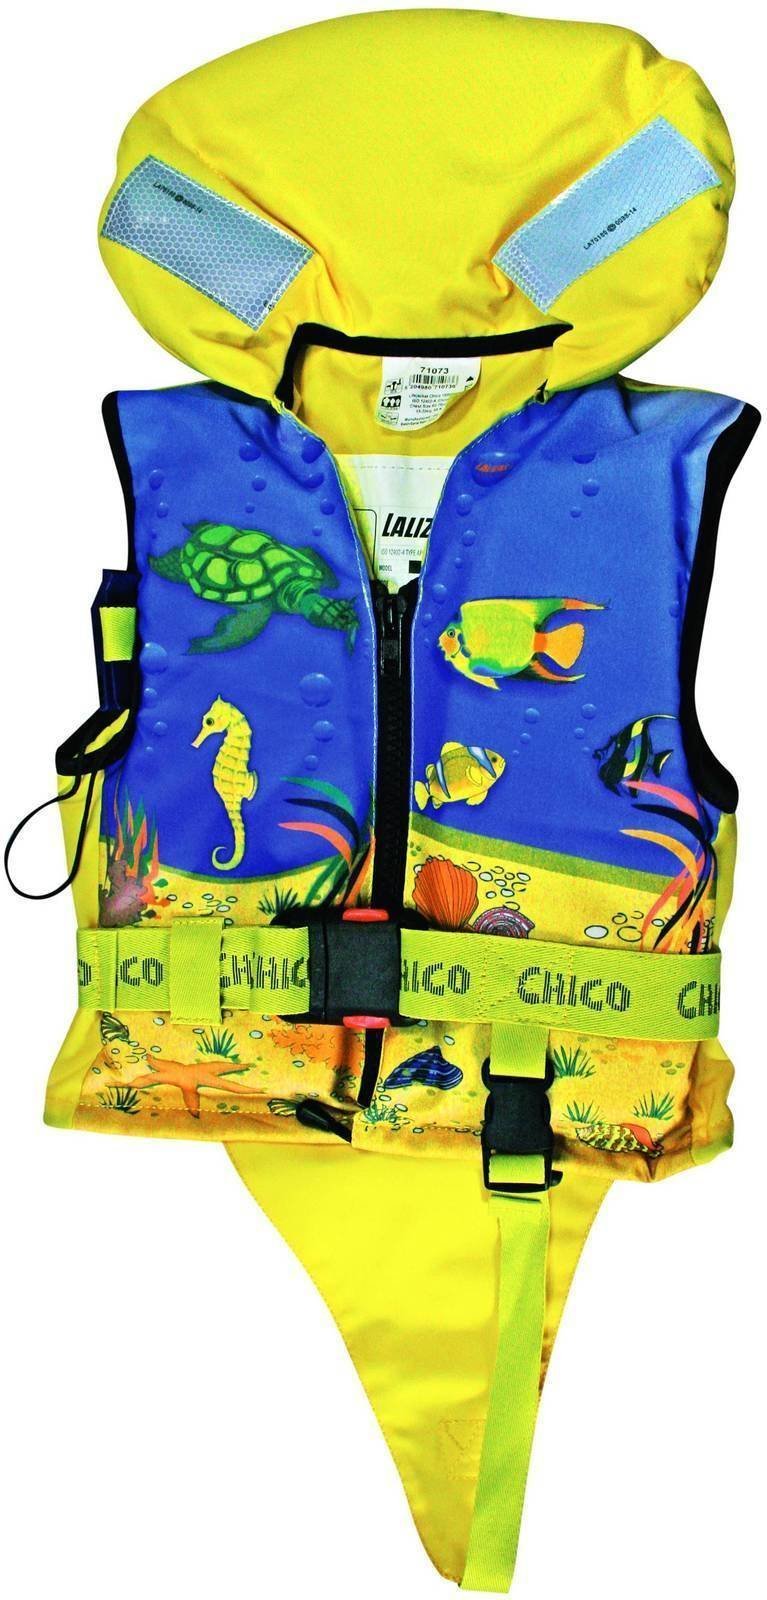 Záchranná vesta Lalizas Chico Lifejacket 15-30kg